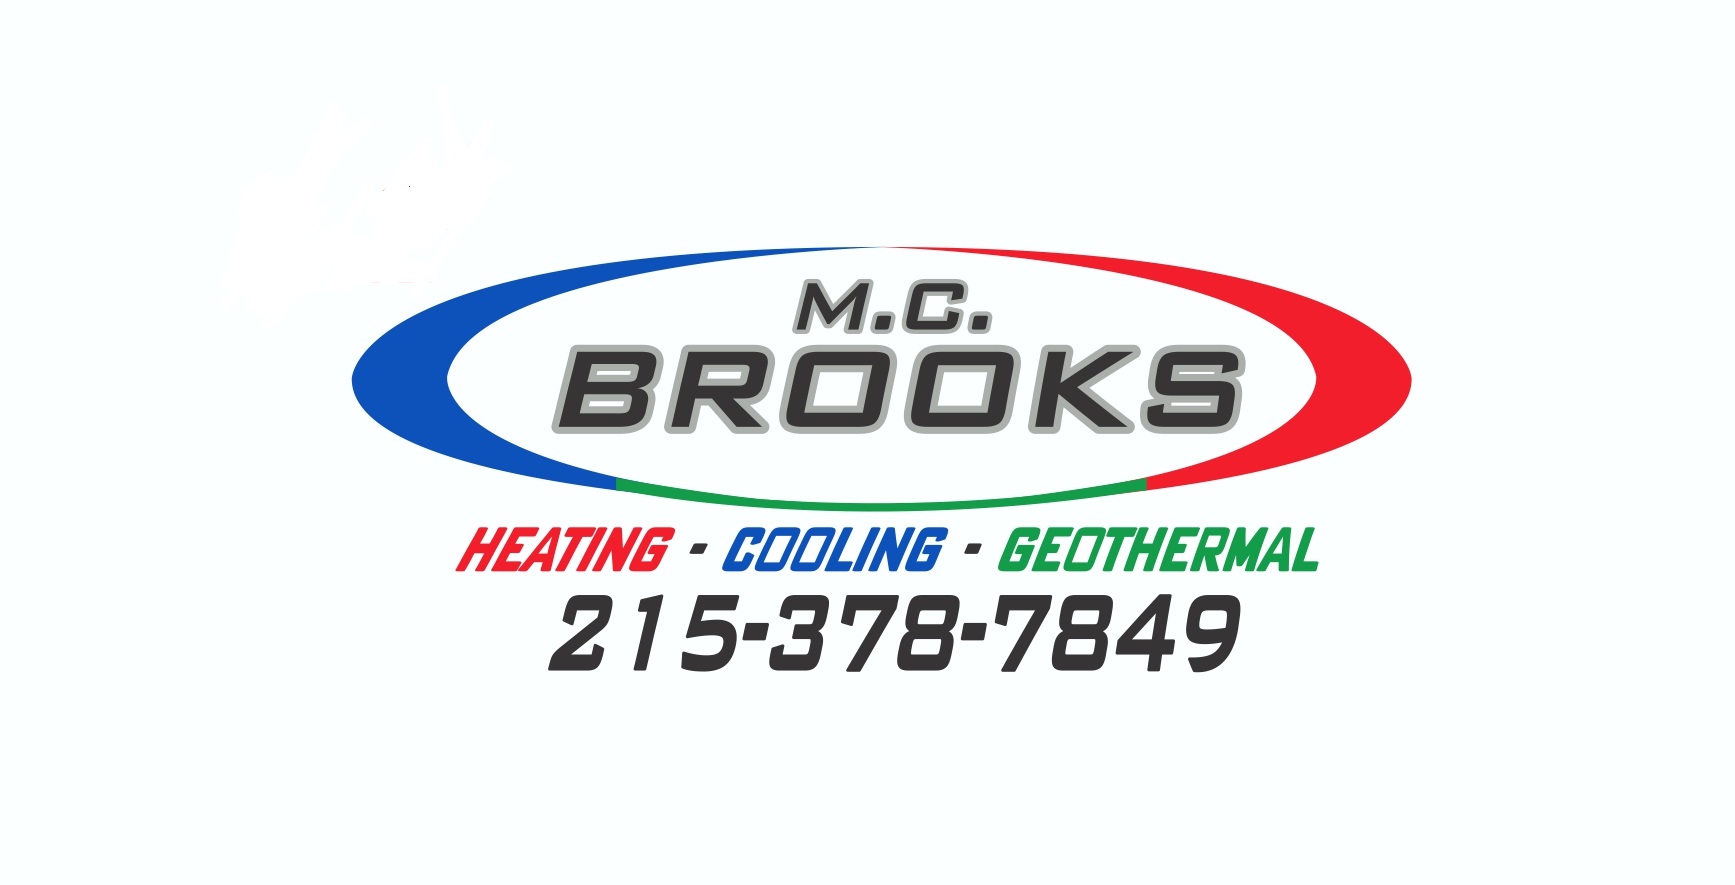 M. C. Brooks Heating Cooling Geothermal - Langhorne, PA